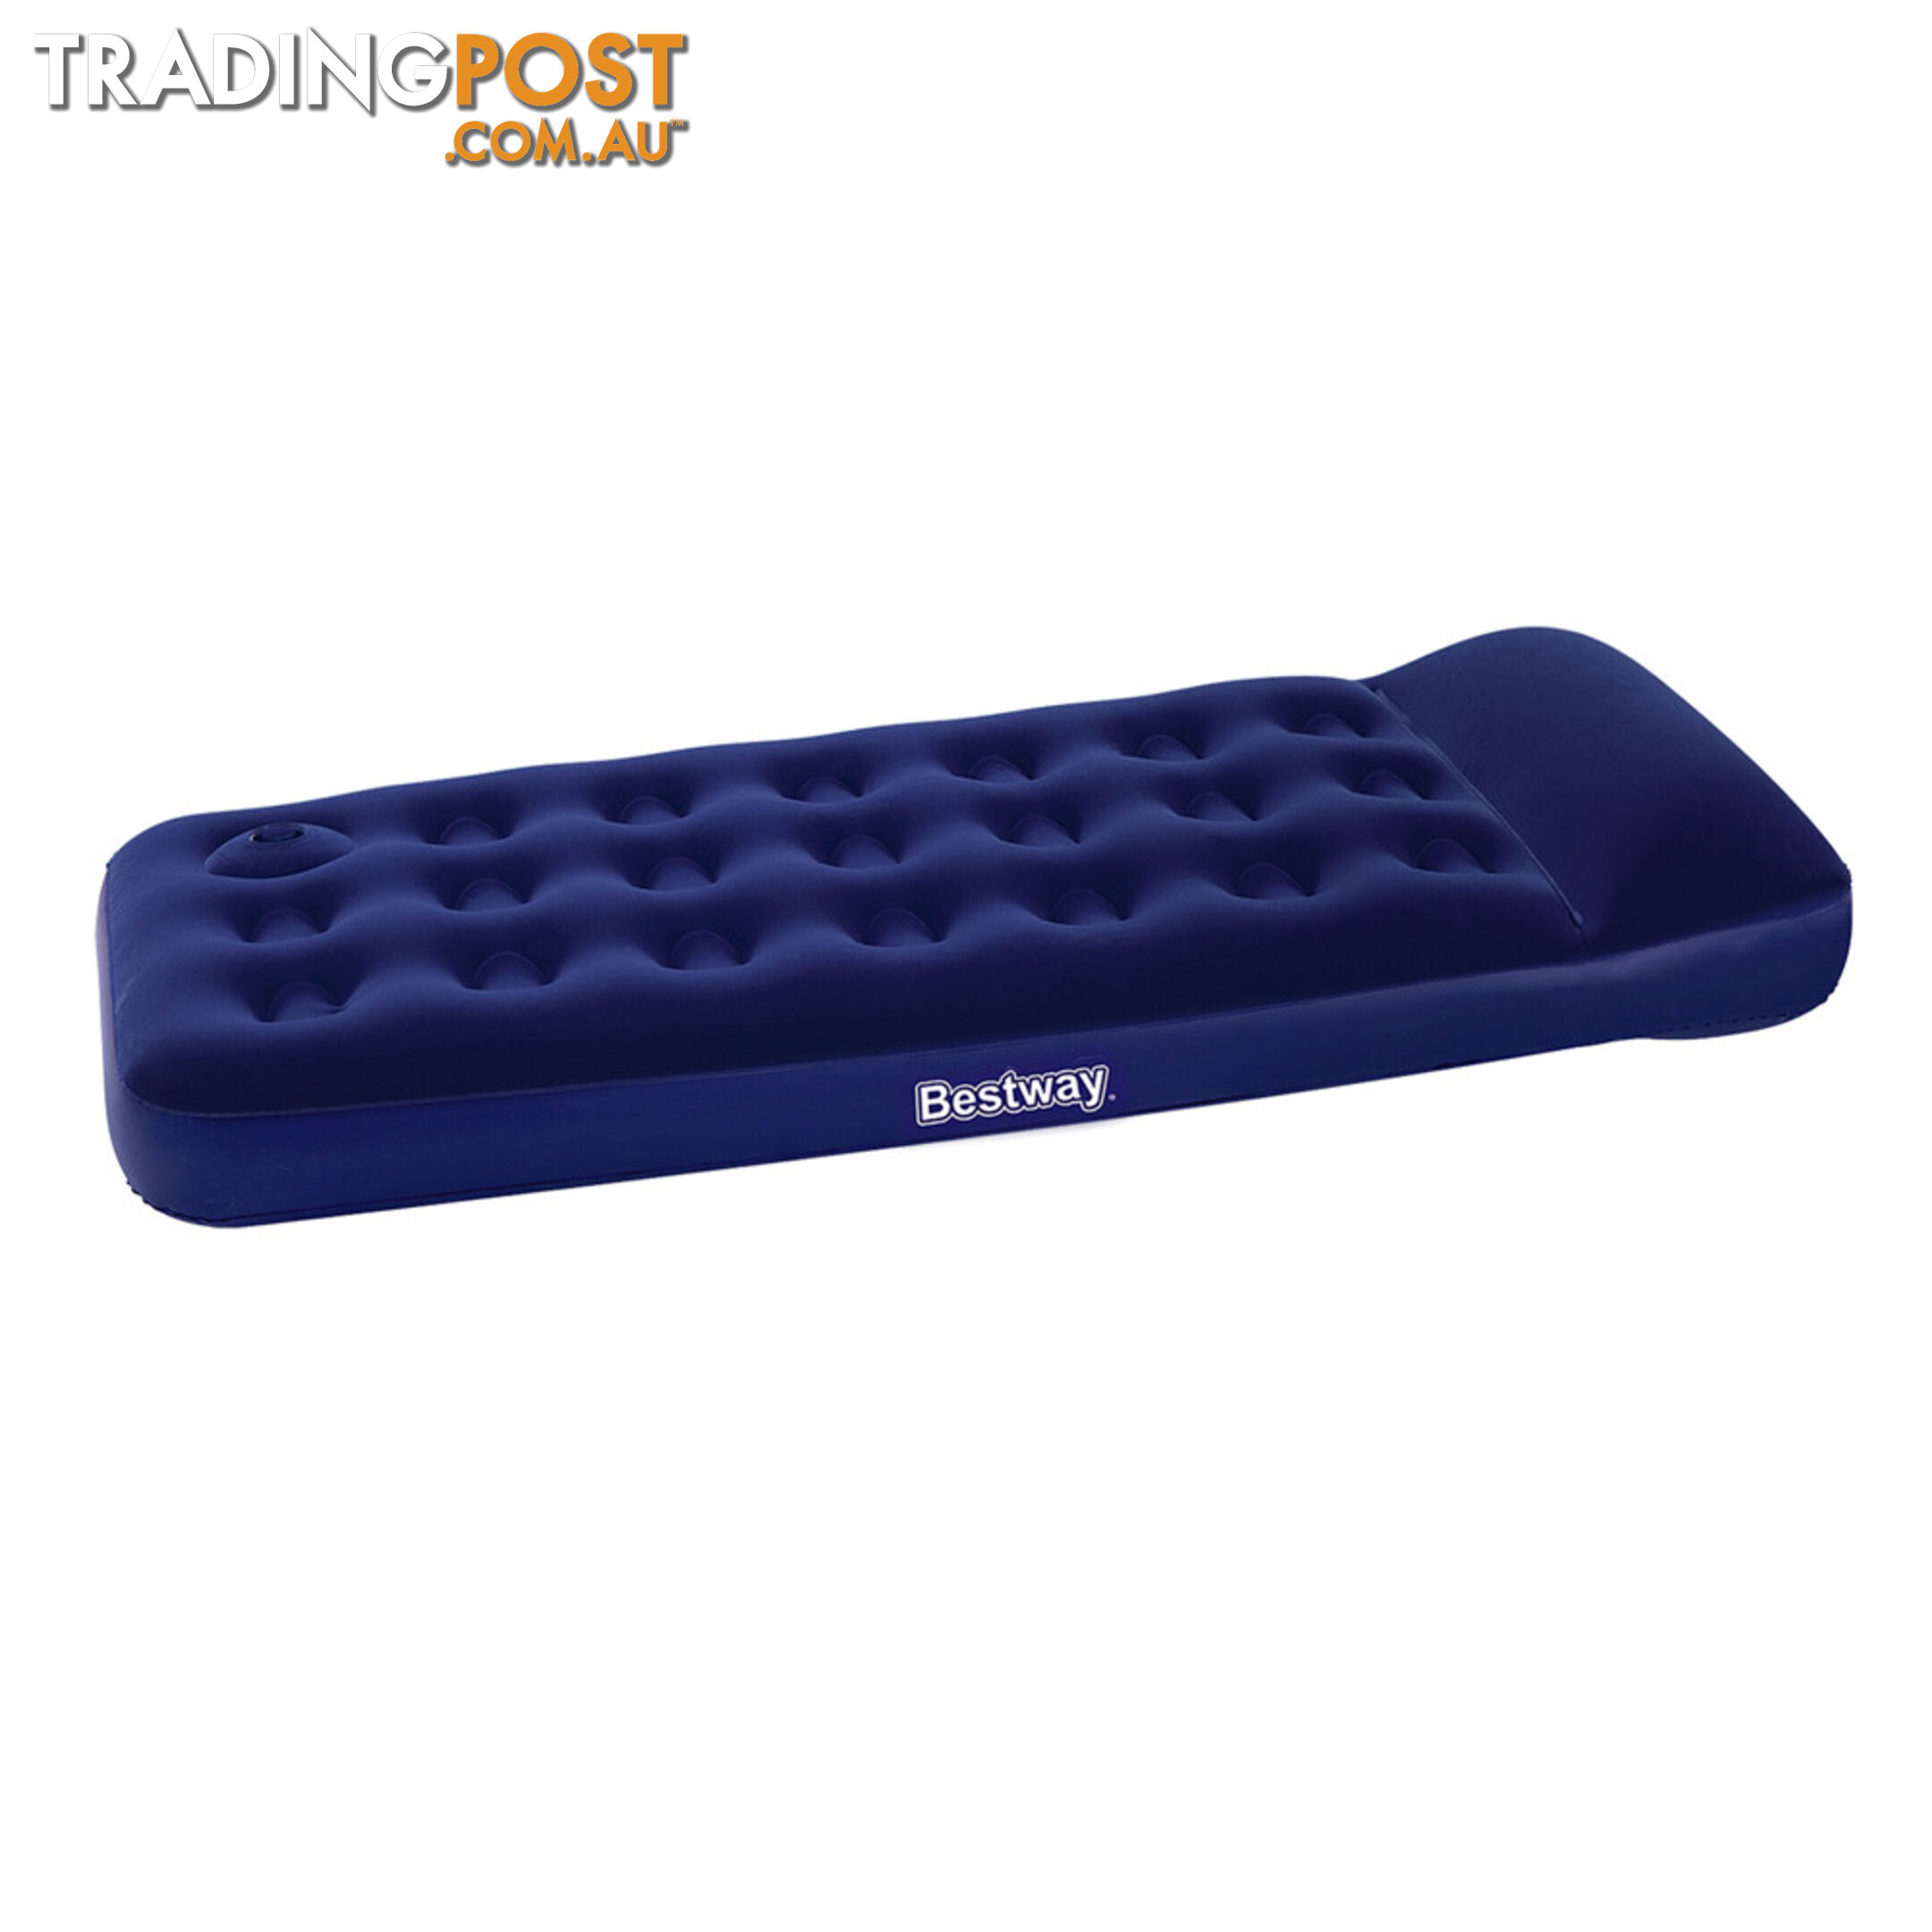 Bestway Single Inflatable Air Mattress Bed w/ Built-in Foot Pump Blue